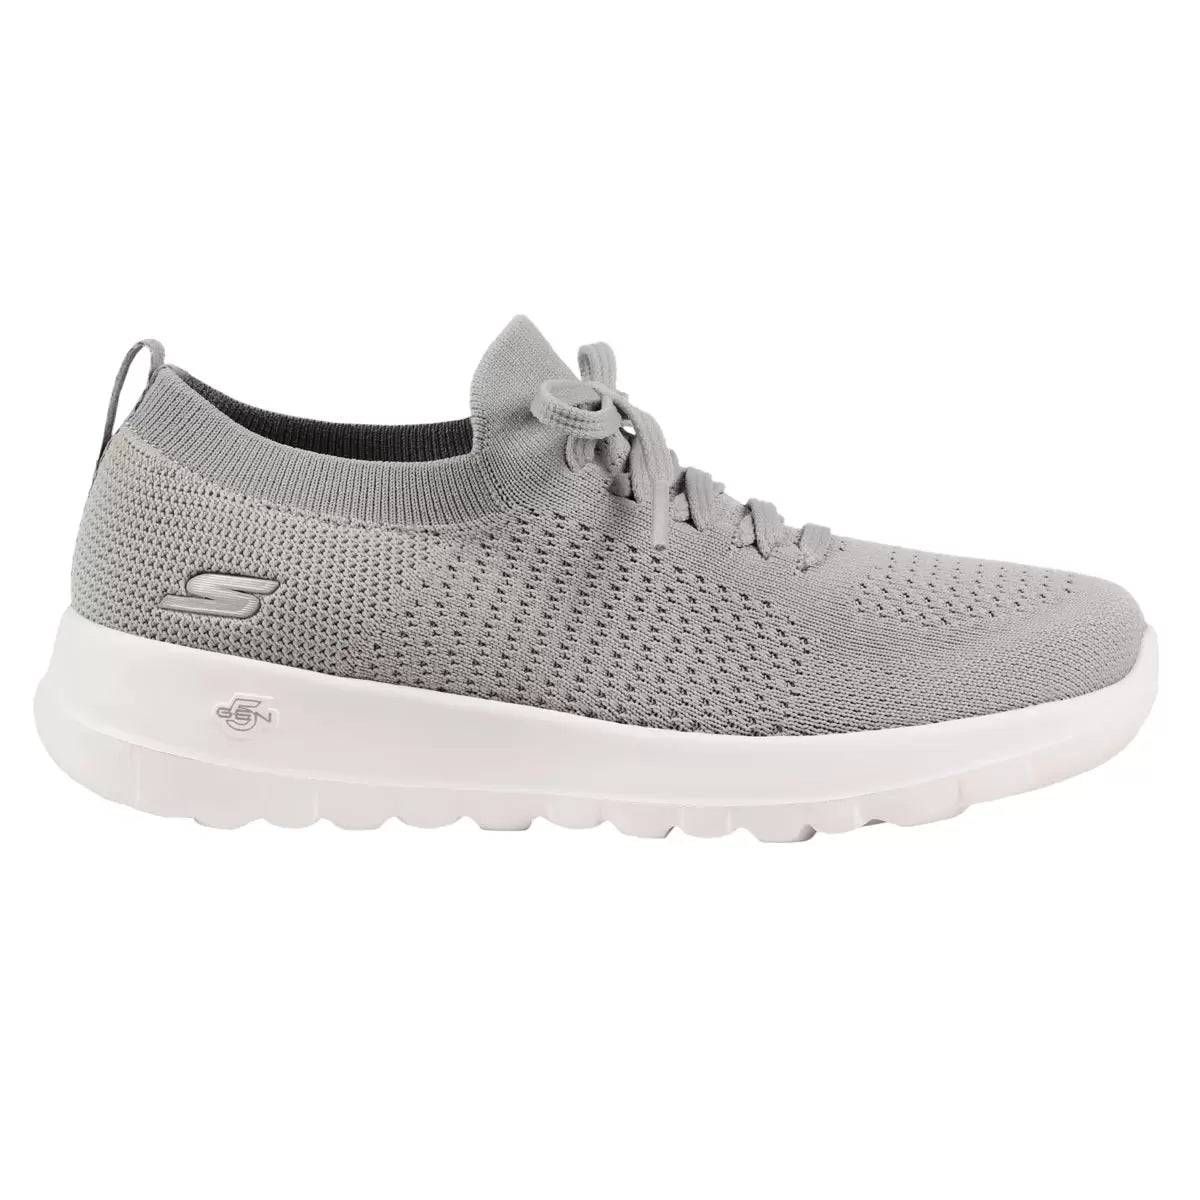 Skechers Go Walk Joy Athletic Shoes Gray 1510744